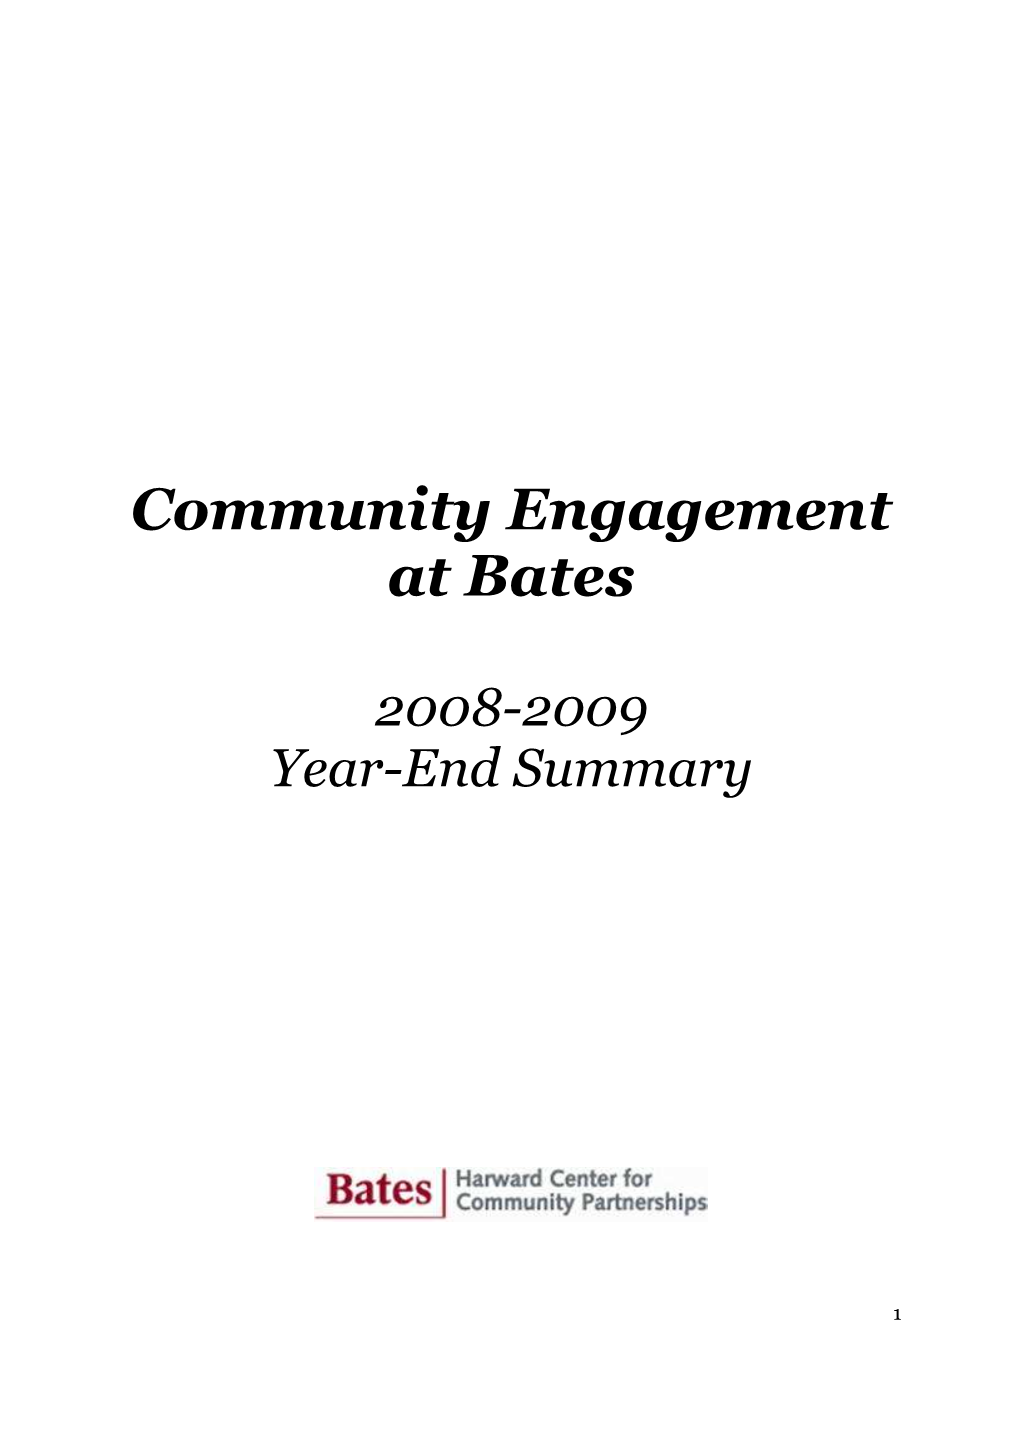 Community Engagement at Bates